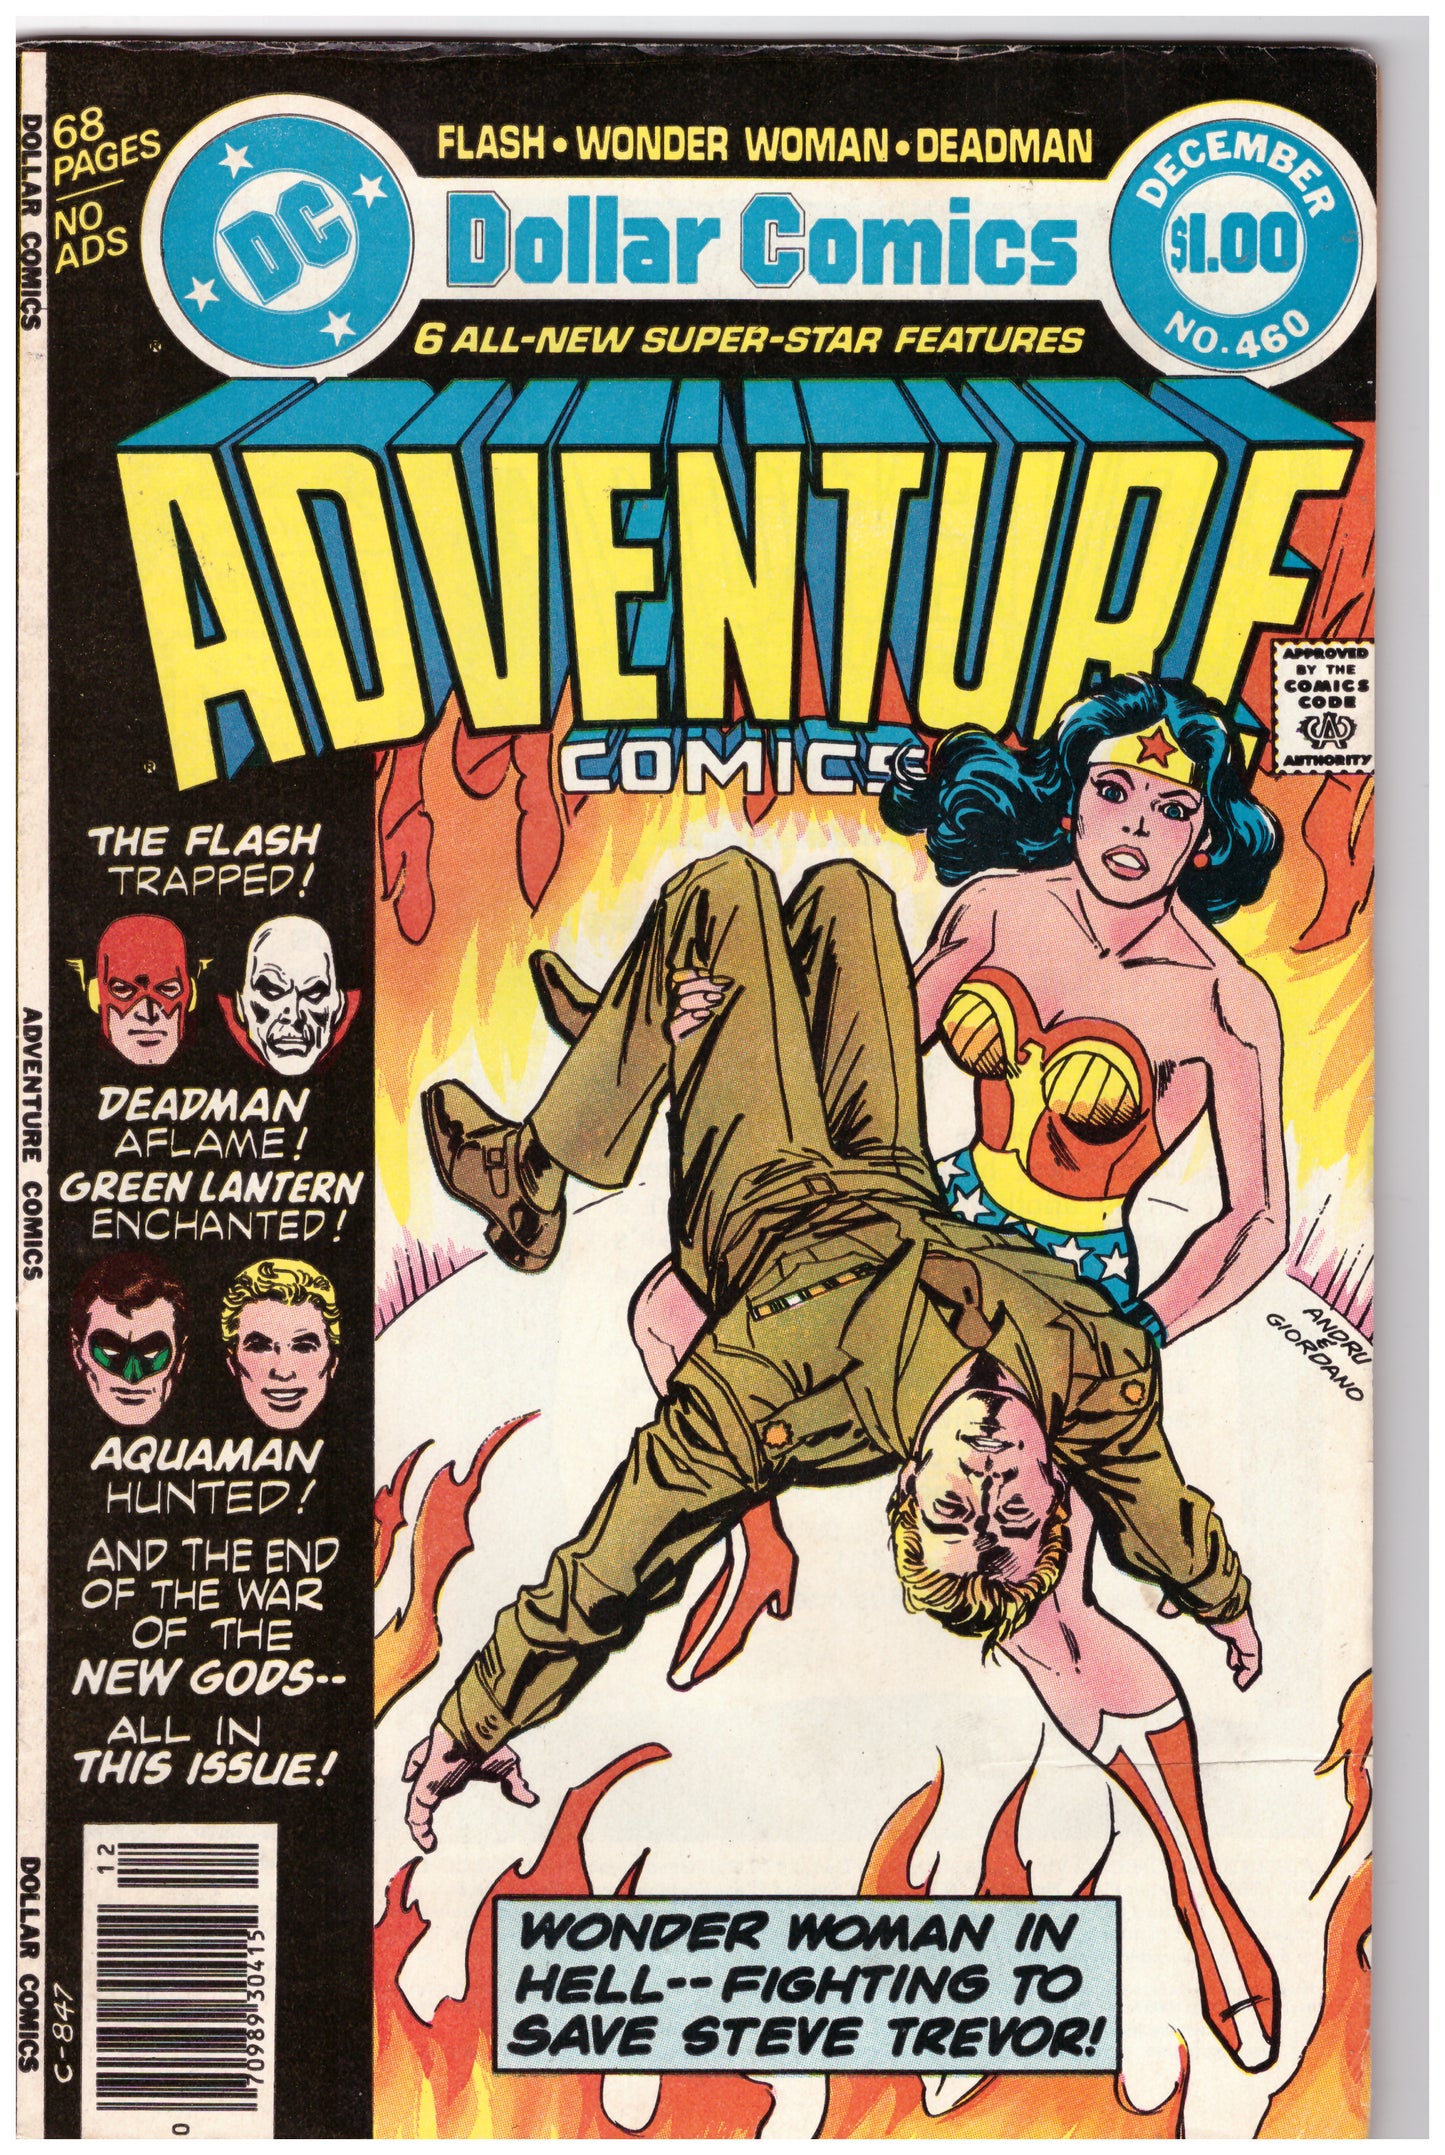 Adventure Comics (1938) #460